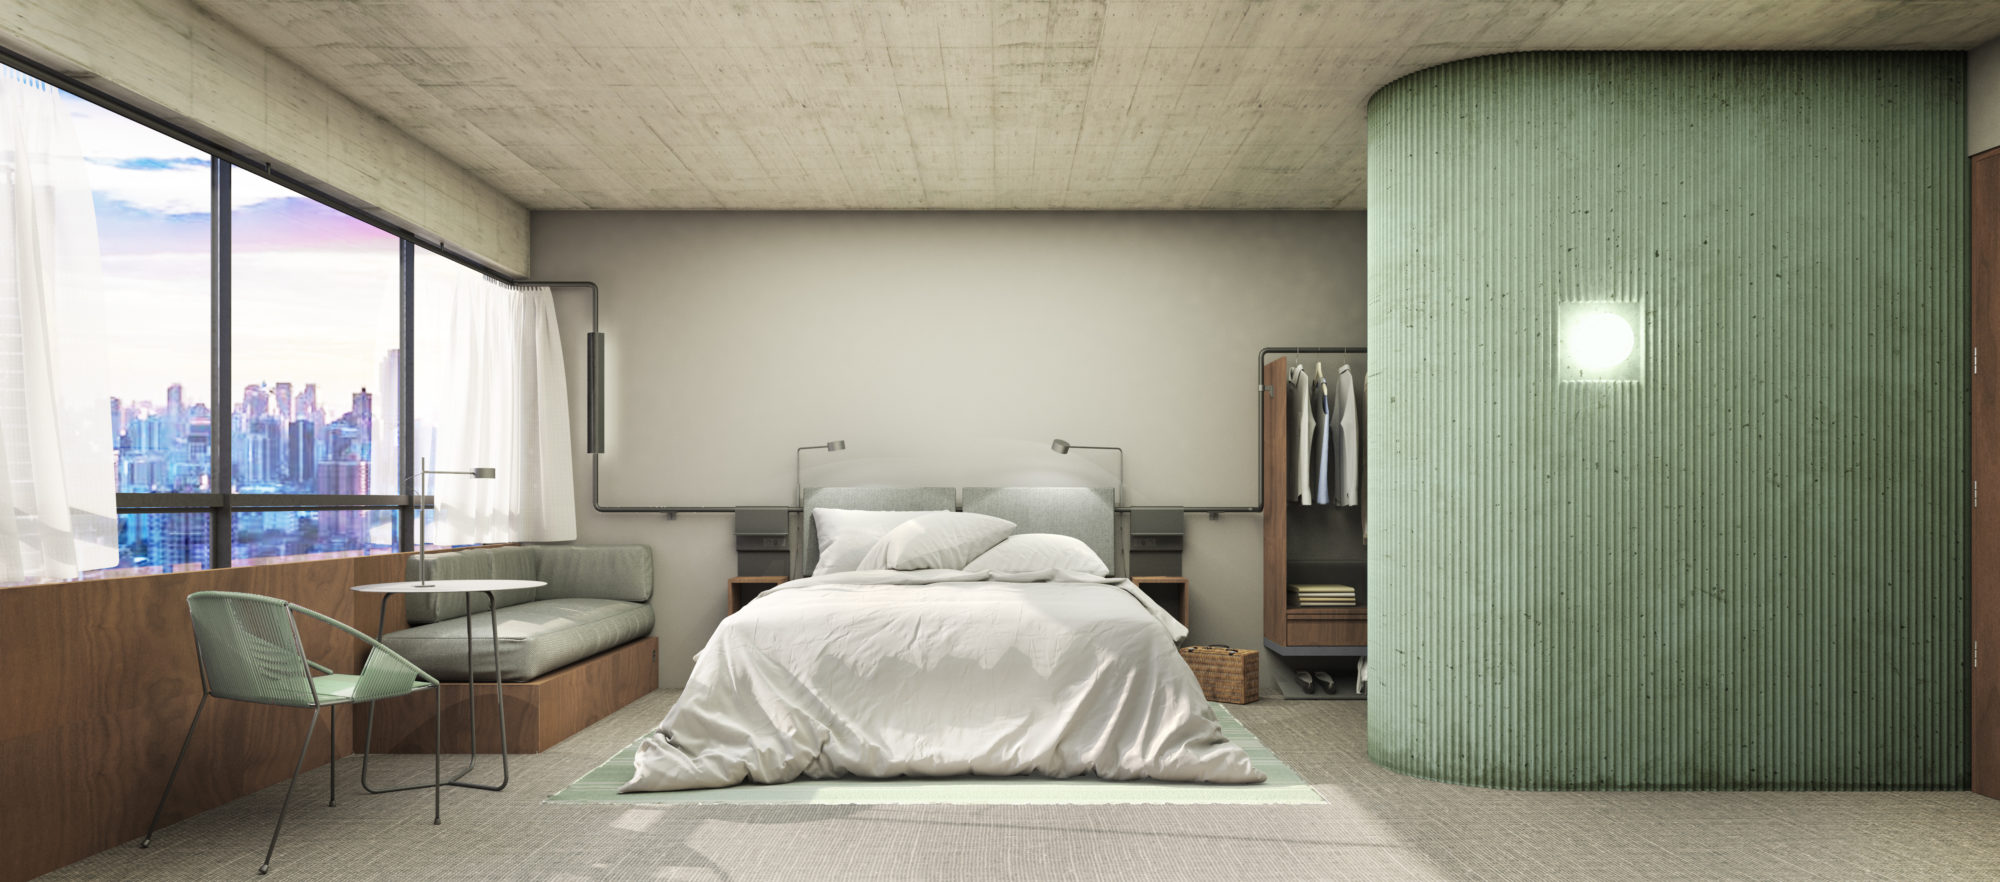 Sample Room Design – Metro-jpg